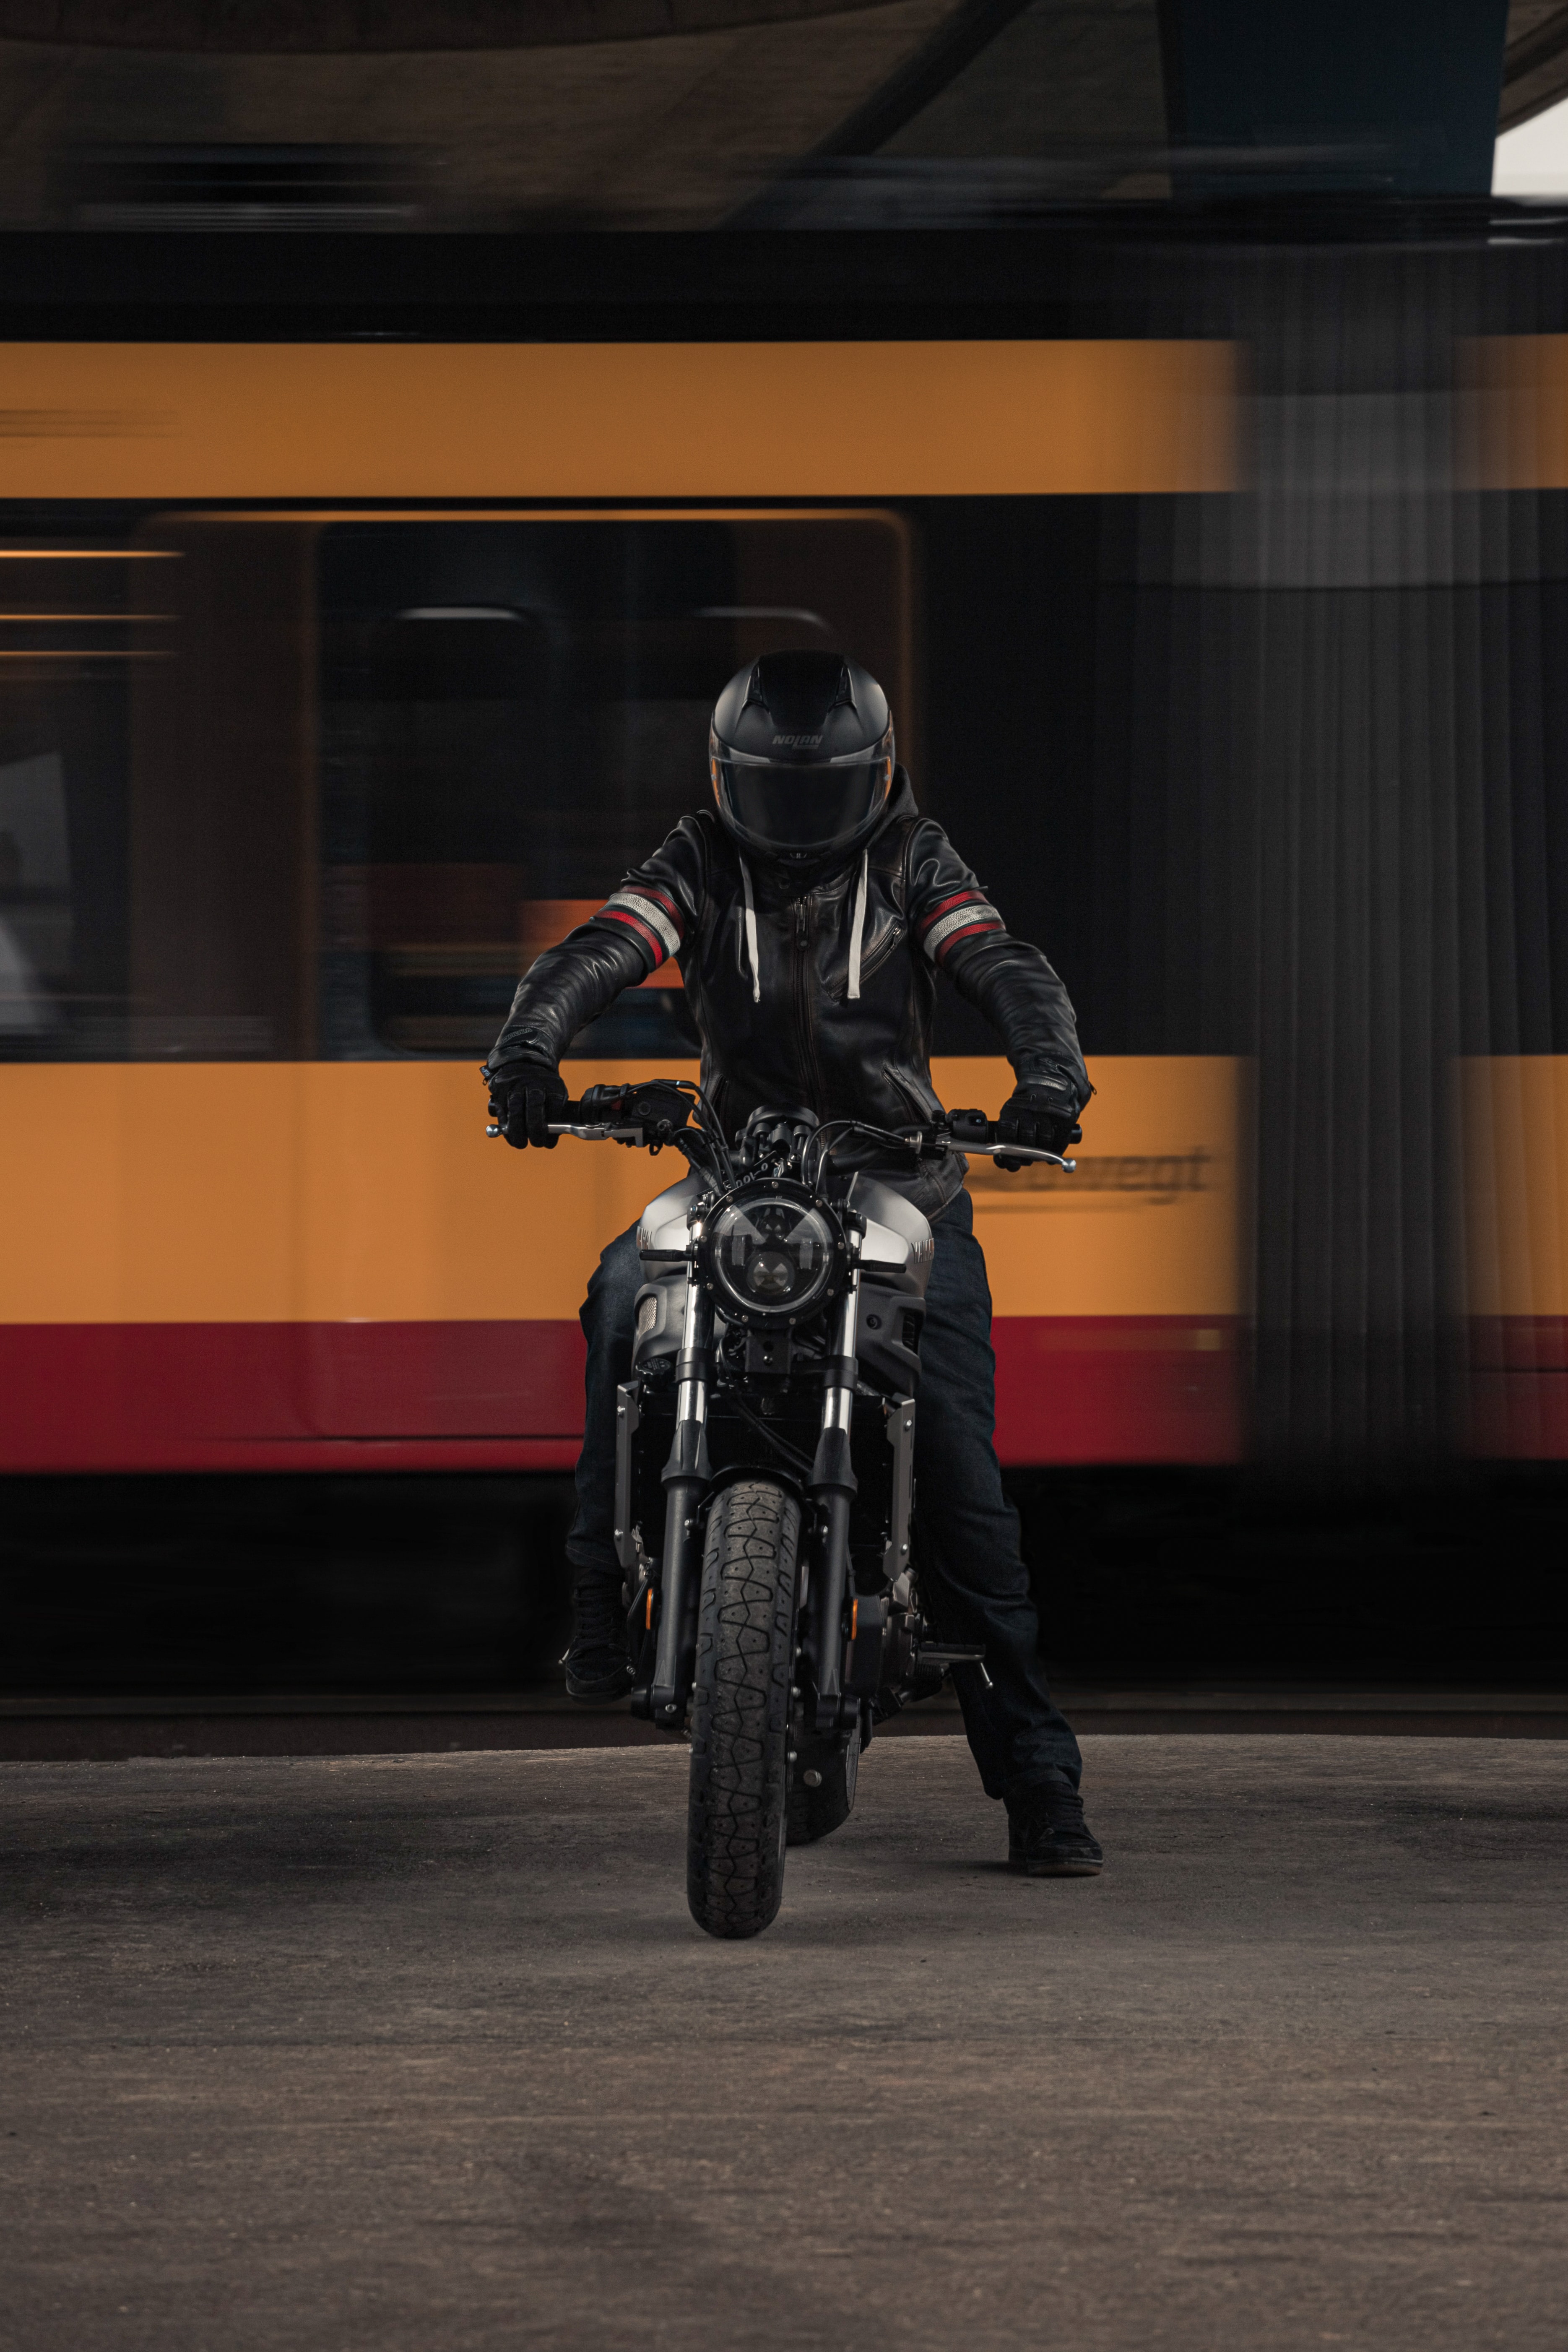 Mobile Wallpaper Motorcyclist 